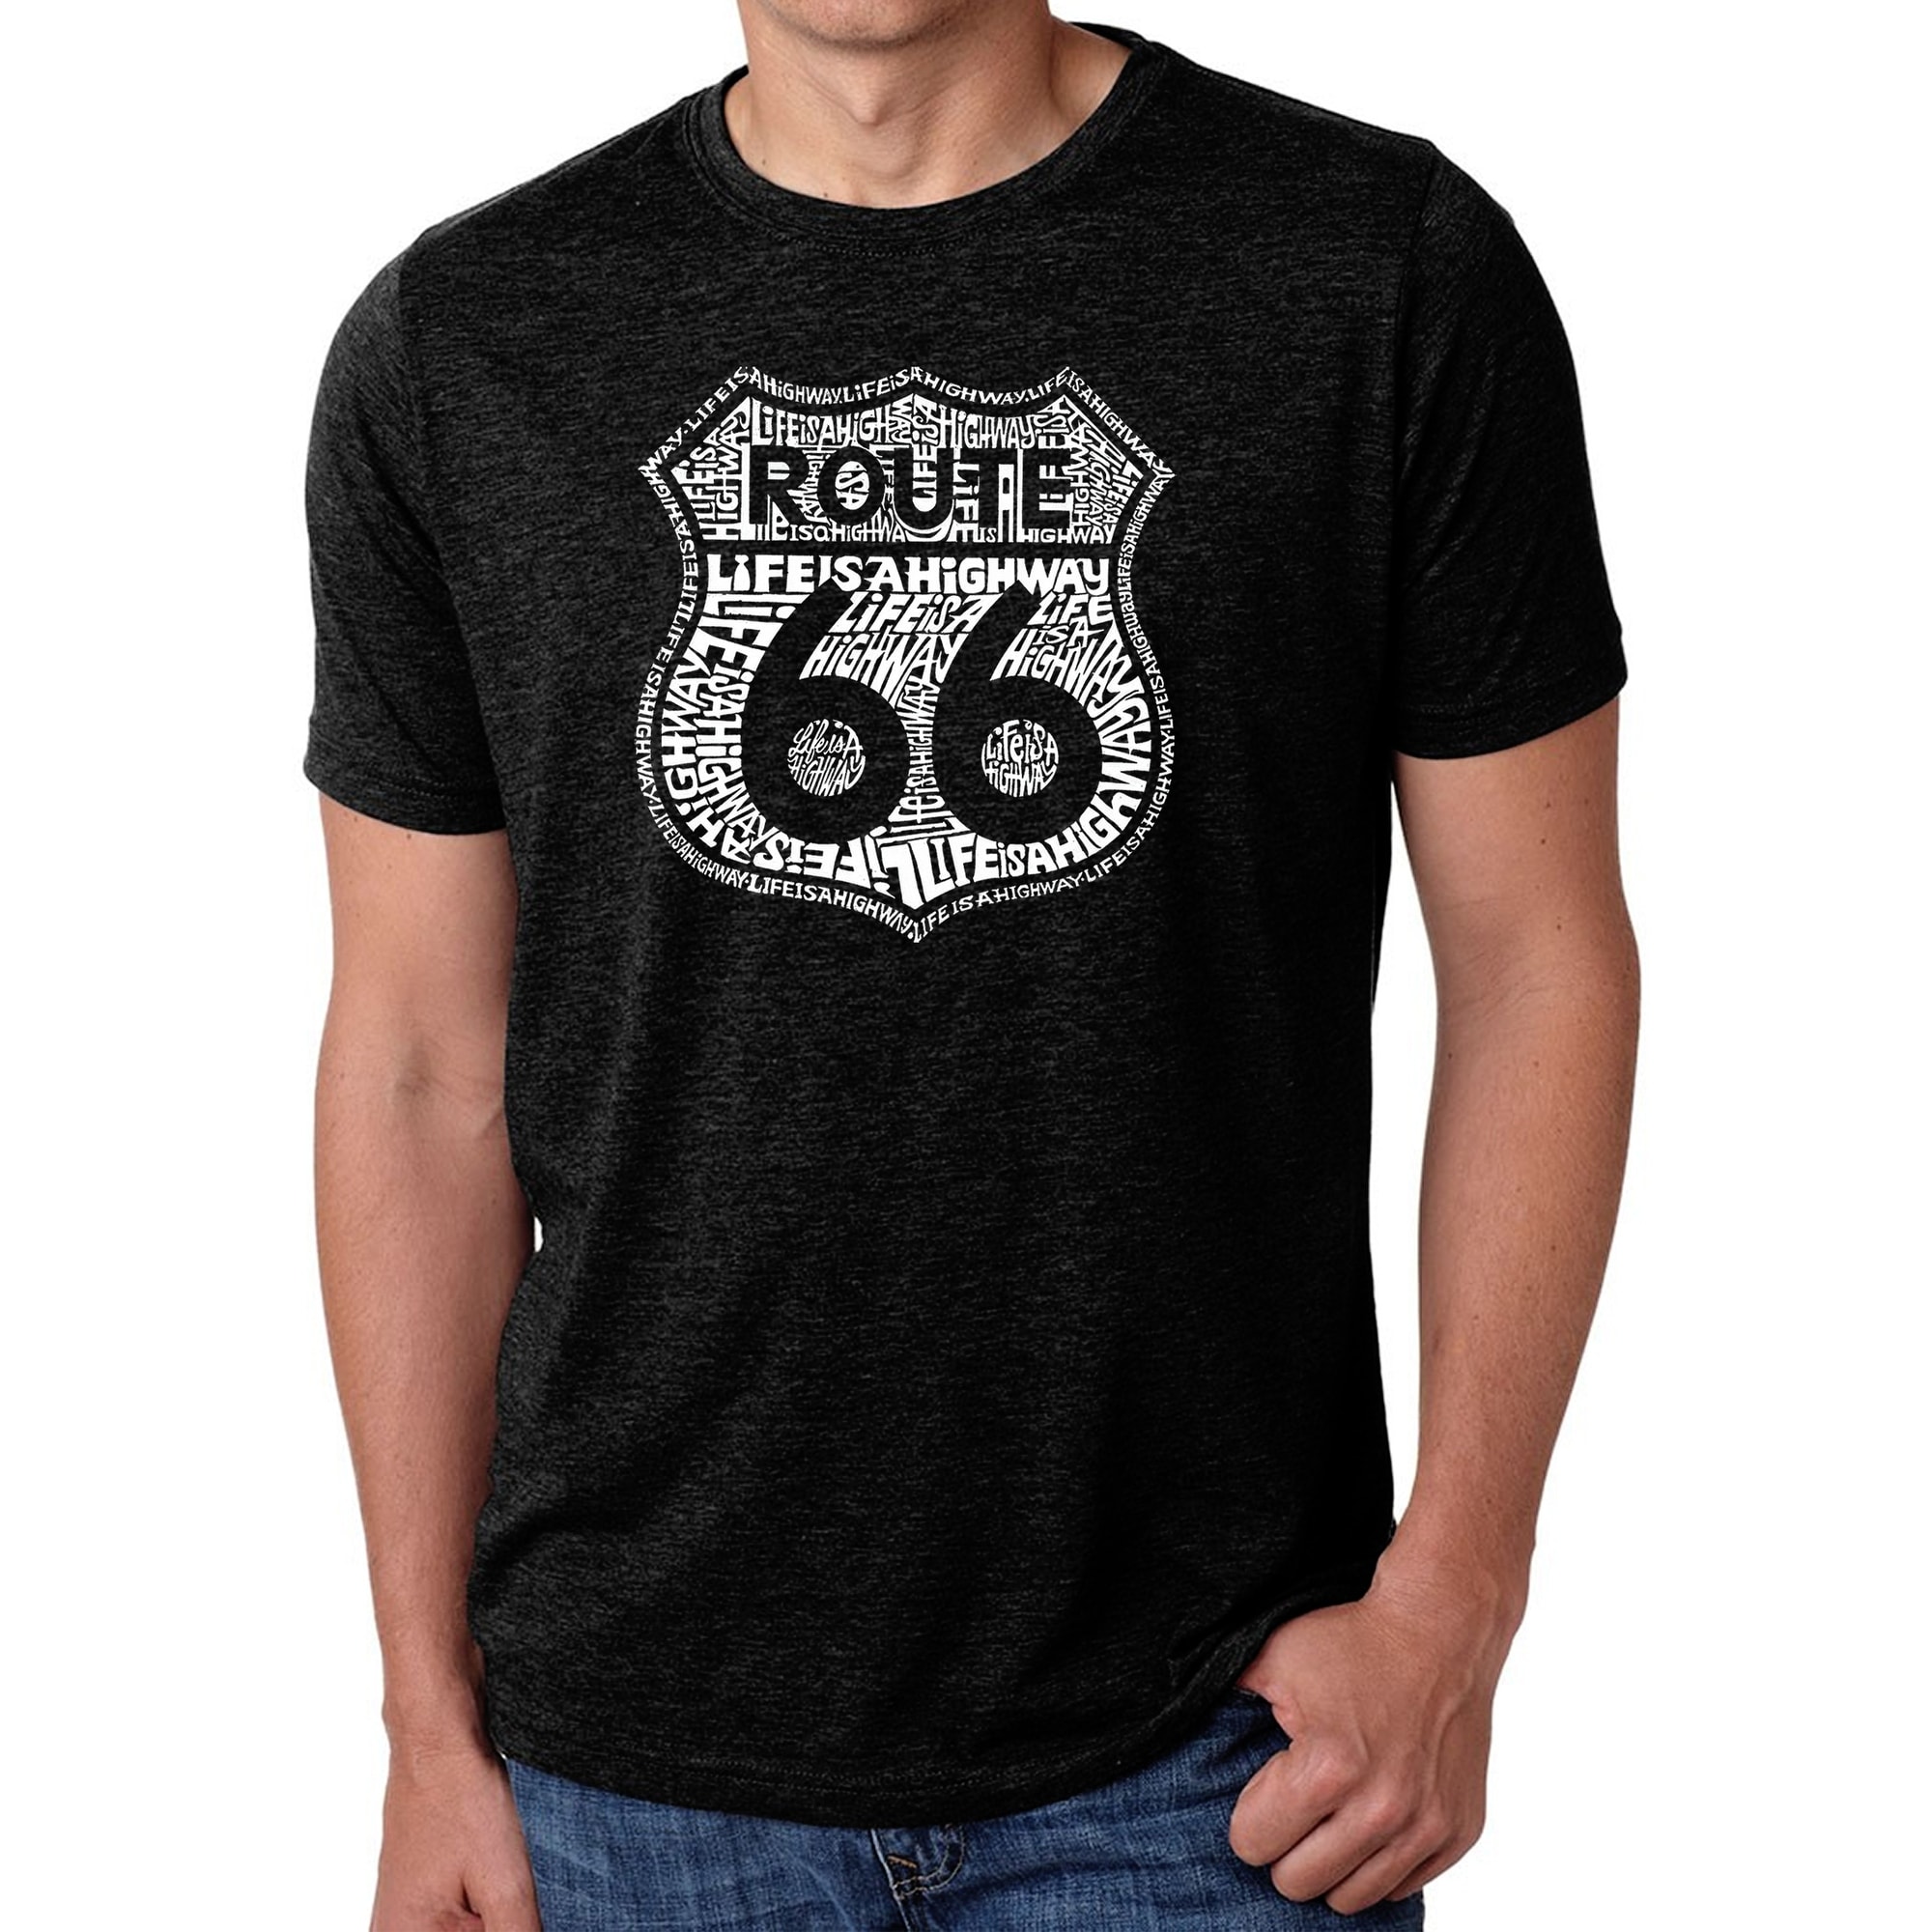 Men's Premium Blend Word Art T-shirt - Route 66 - Life is a Highway